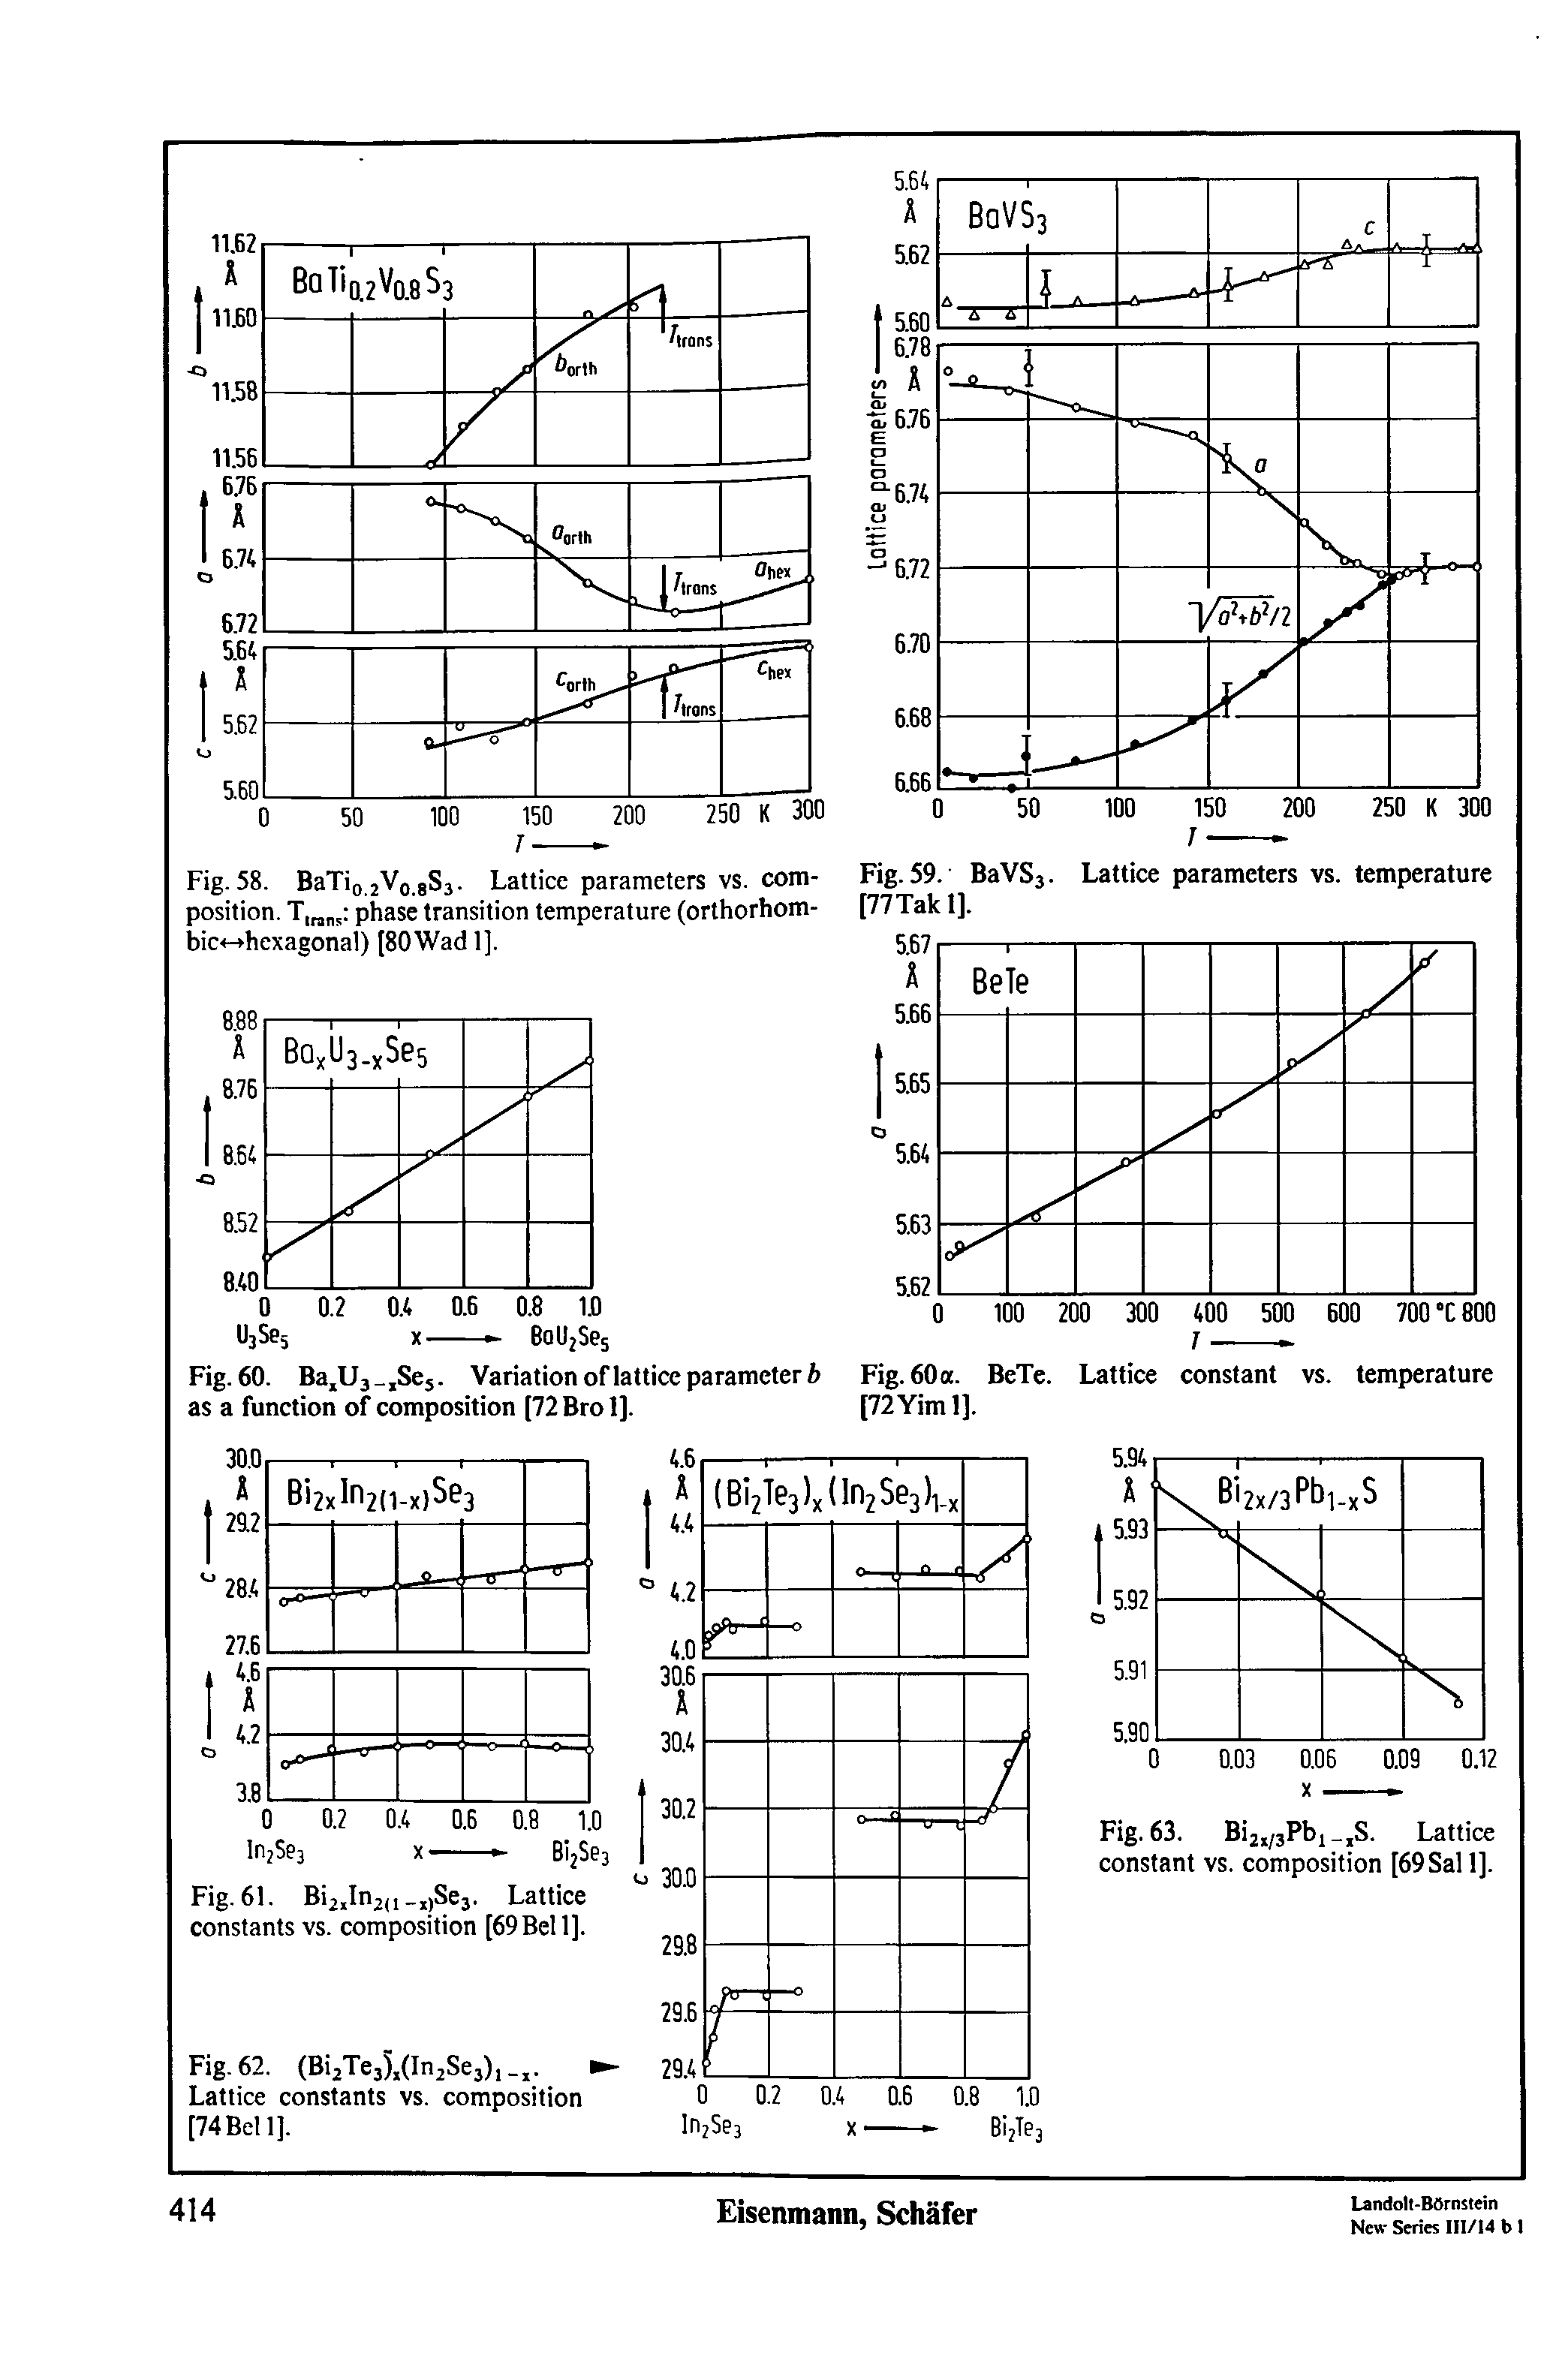 Fig. 58. BaTio jVo.gSj. Lattice parameters vs. com- Fig. 59. BaVSj. Lattice parameters vs. temperature position. T, s phase transition temperature (orthorhon bic - hexagonal) [80Wad 1].